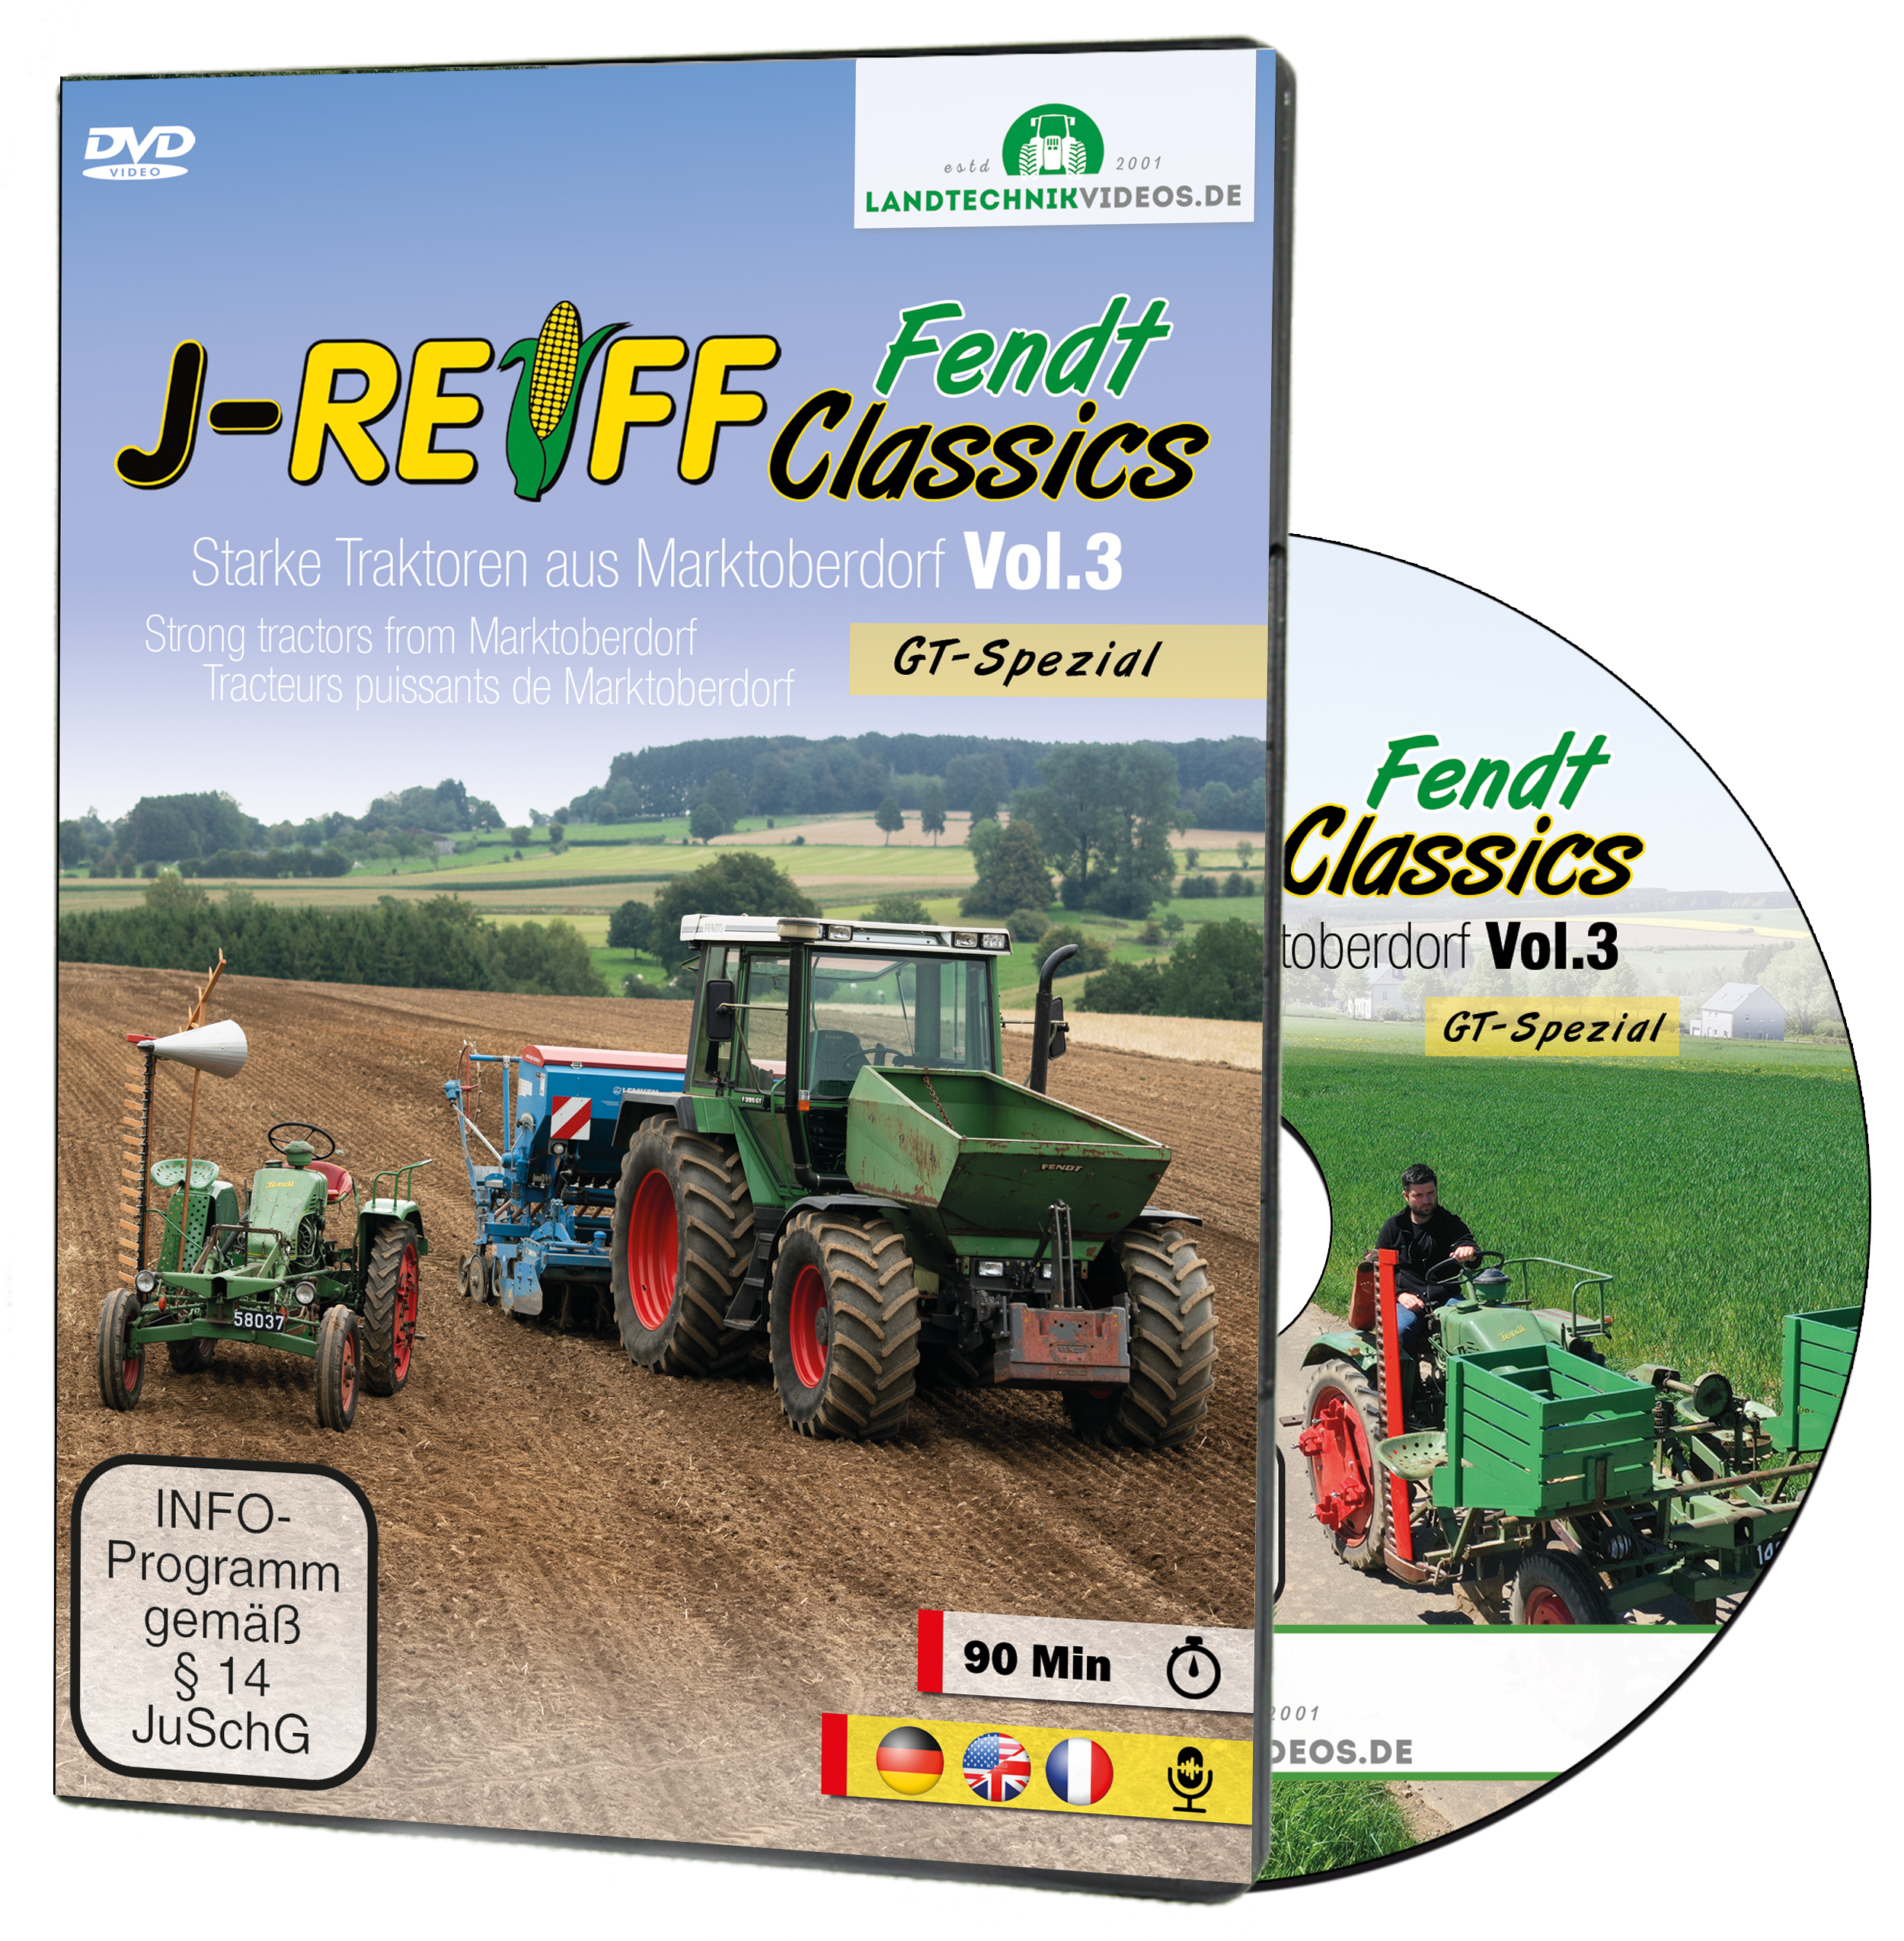 J-Reiff - J-Reiff Fendt Classics Vol. 3 as DVD